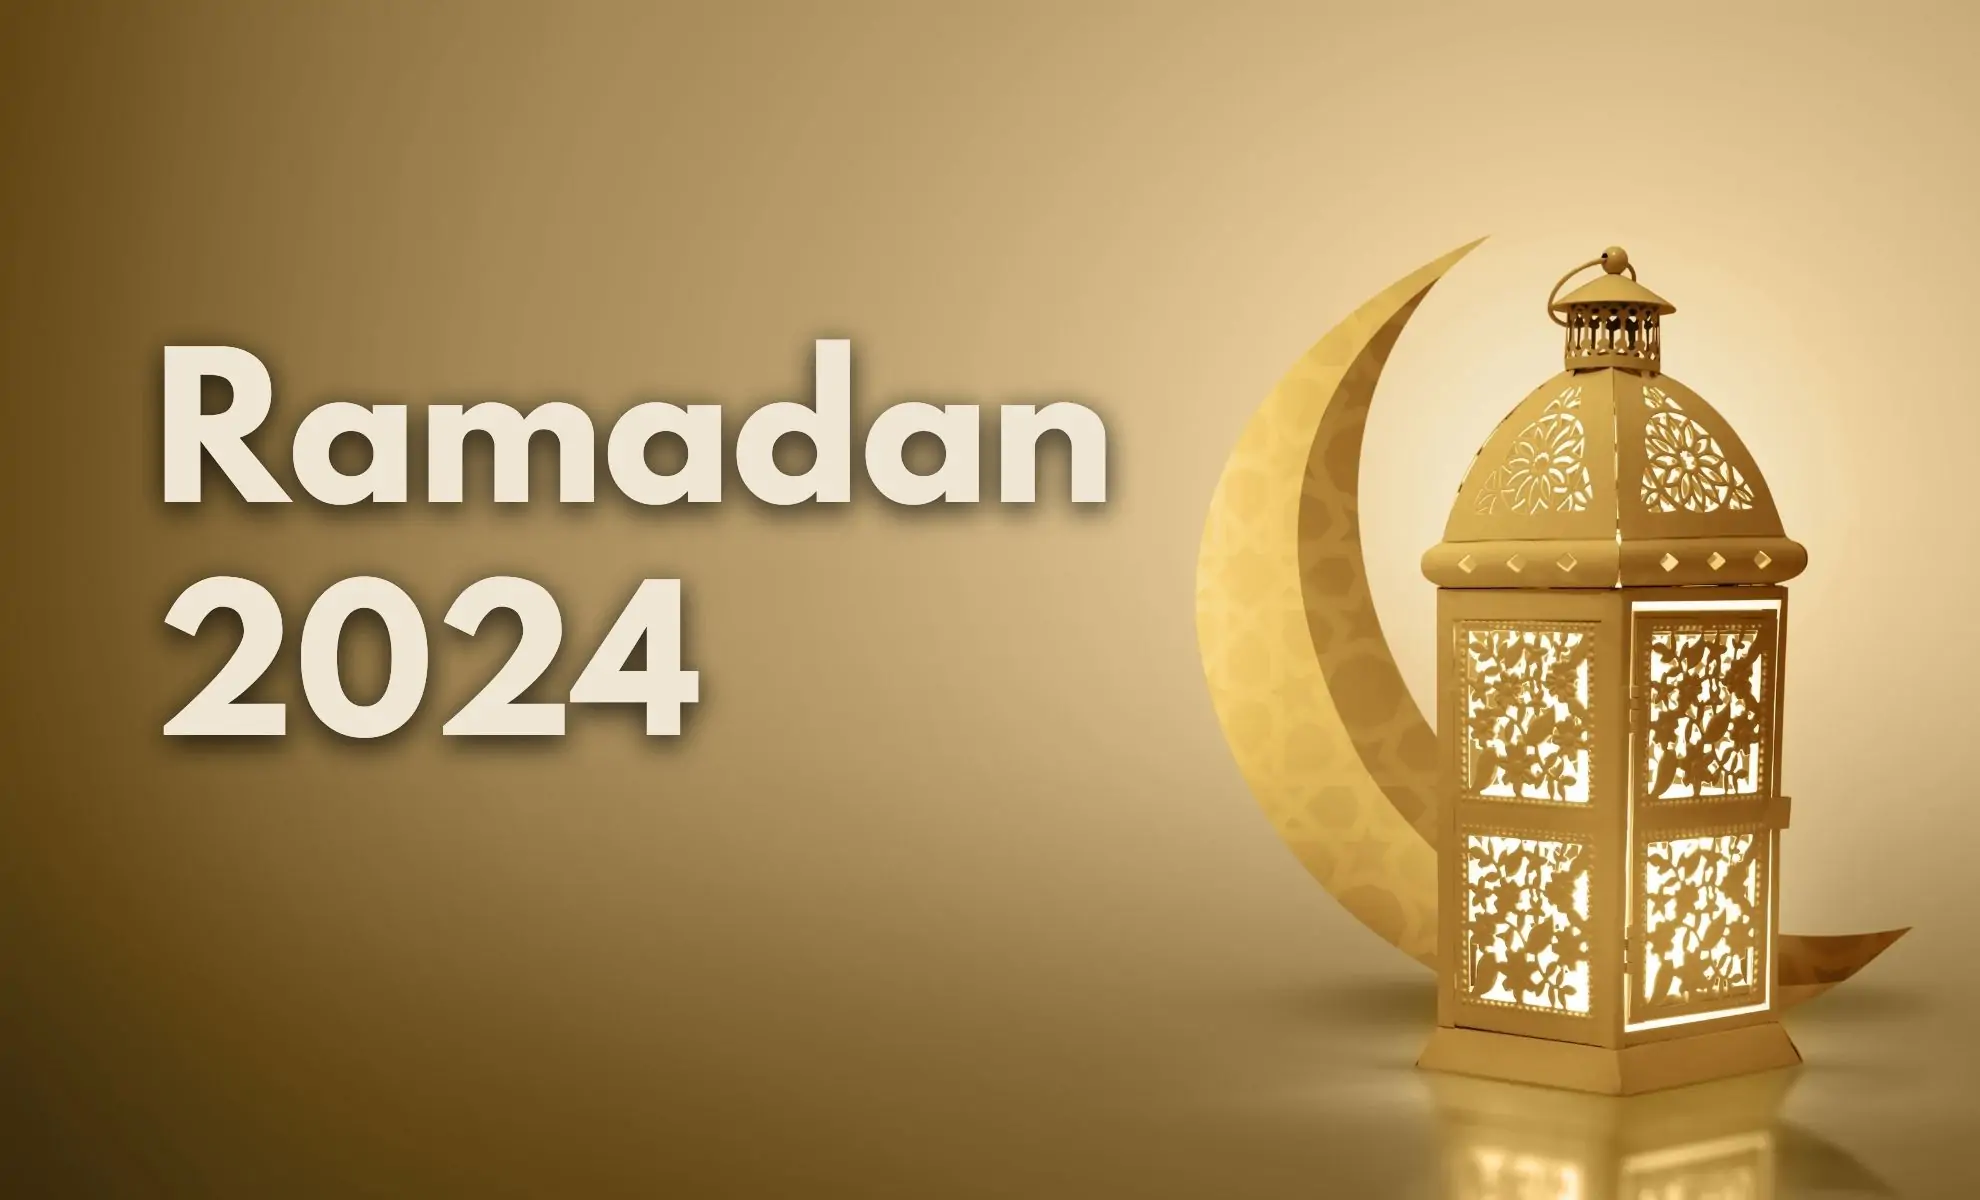 Date De Ramadan 2024 Jade Rianon